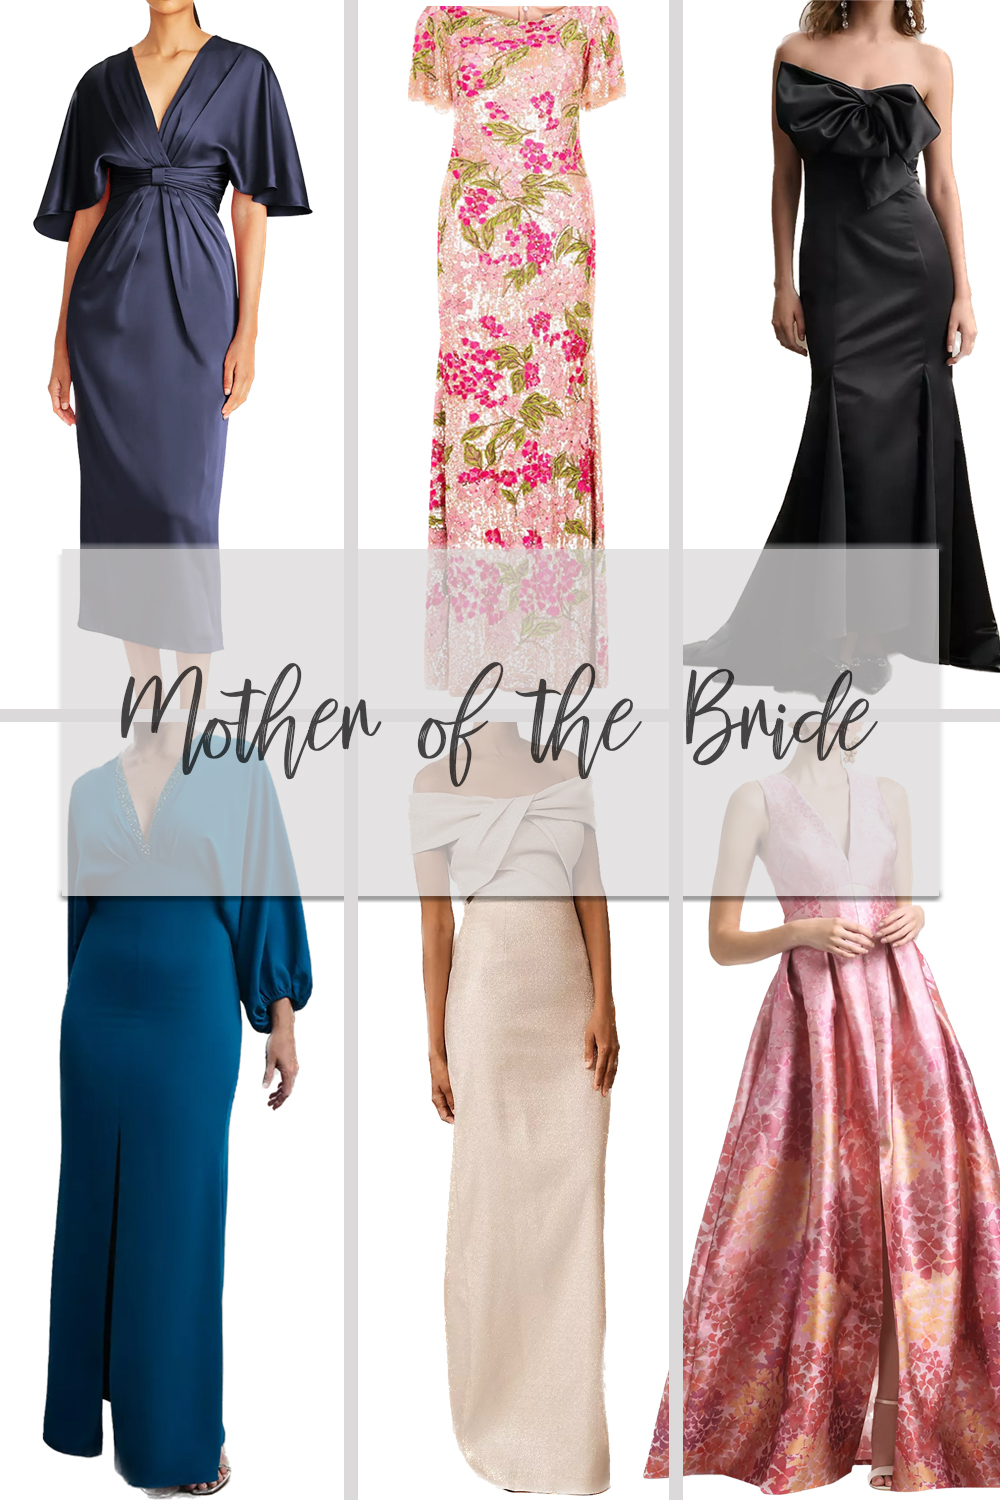 Timeless elegance wedding fashion tips for midlife women